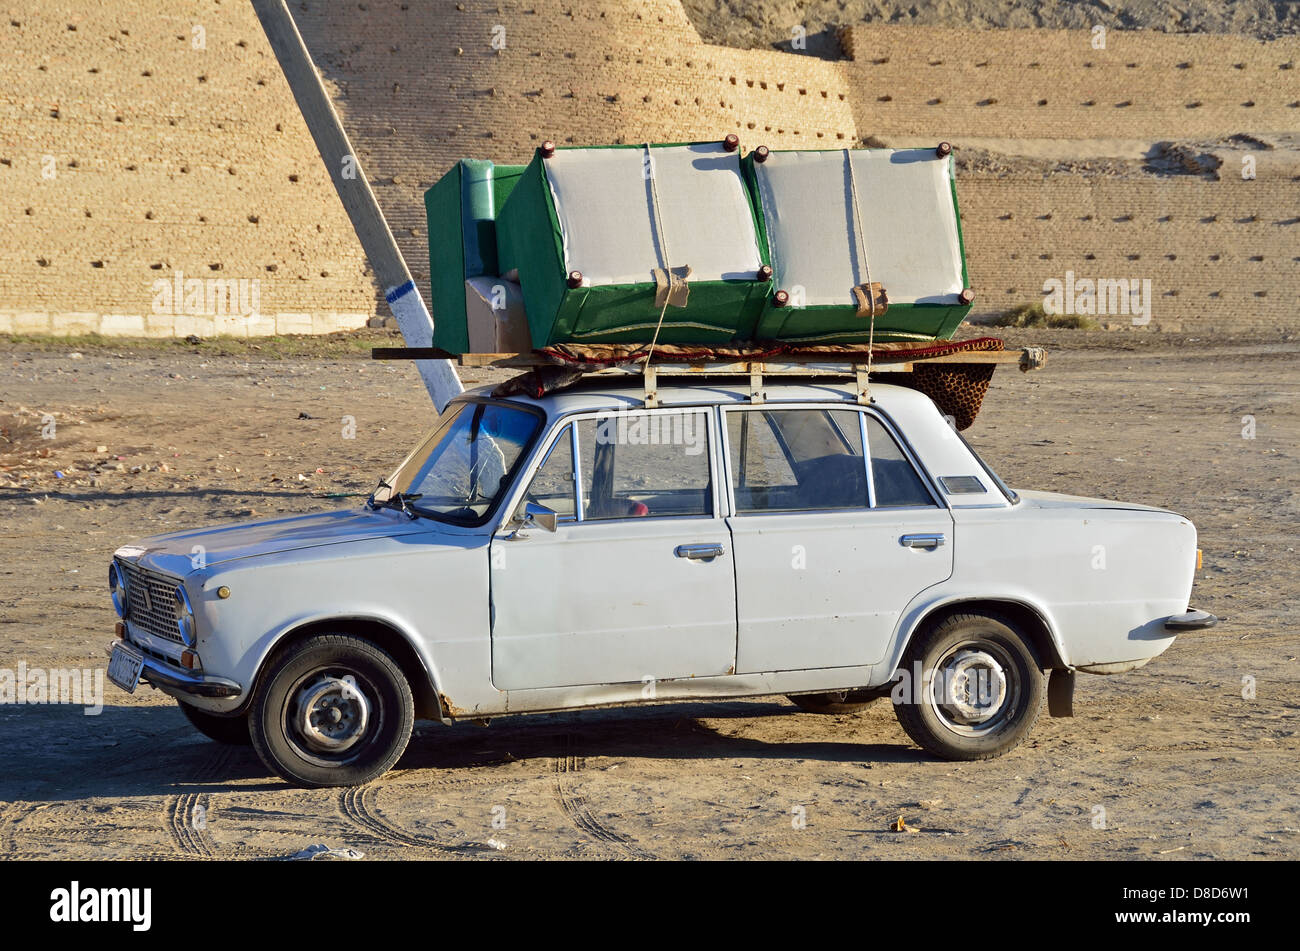 Lada old car uzbekistan hi-res stock photography and images - Alamy